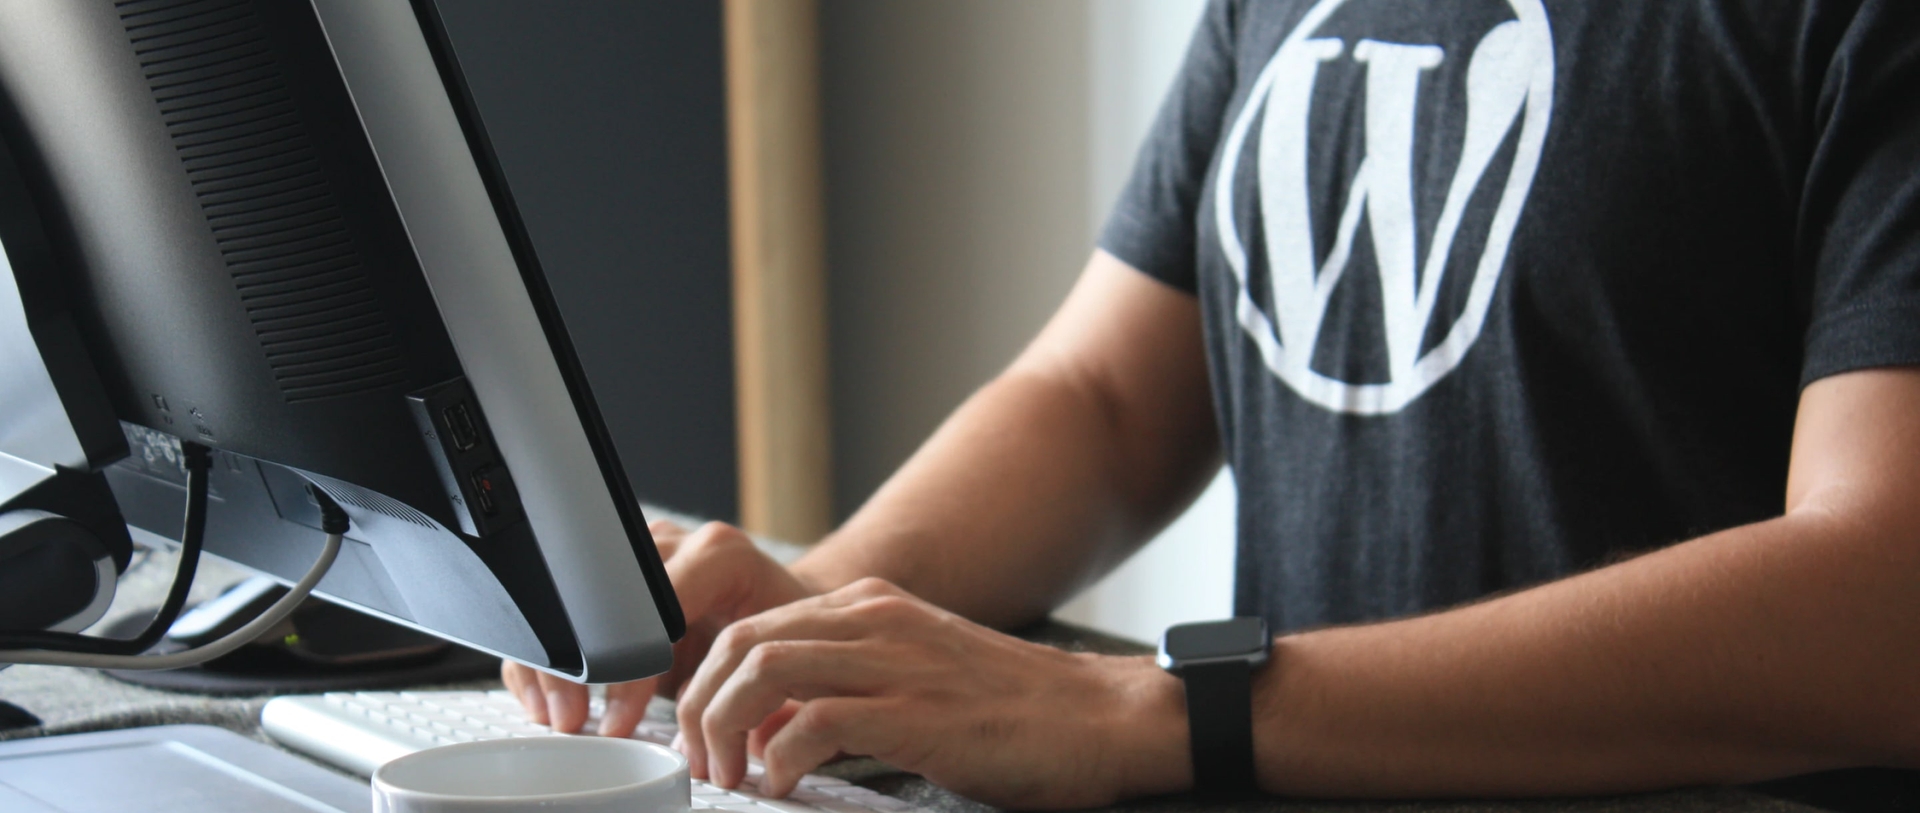 a man working on a PC wearing Wordpress t-shirt